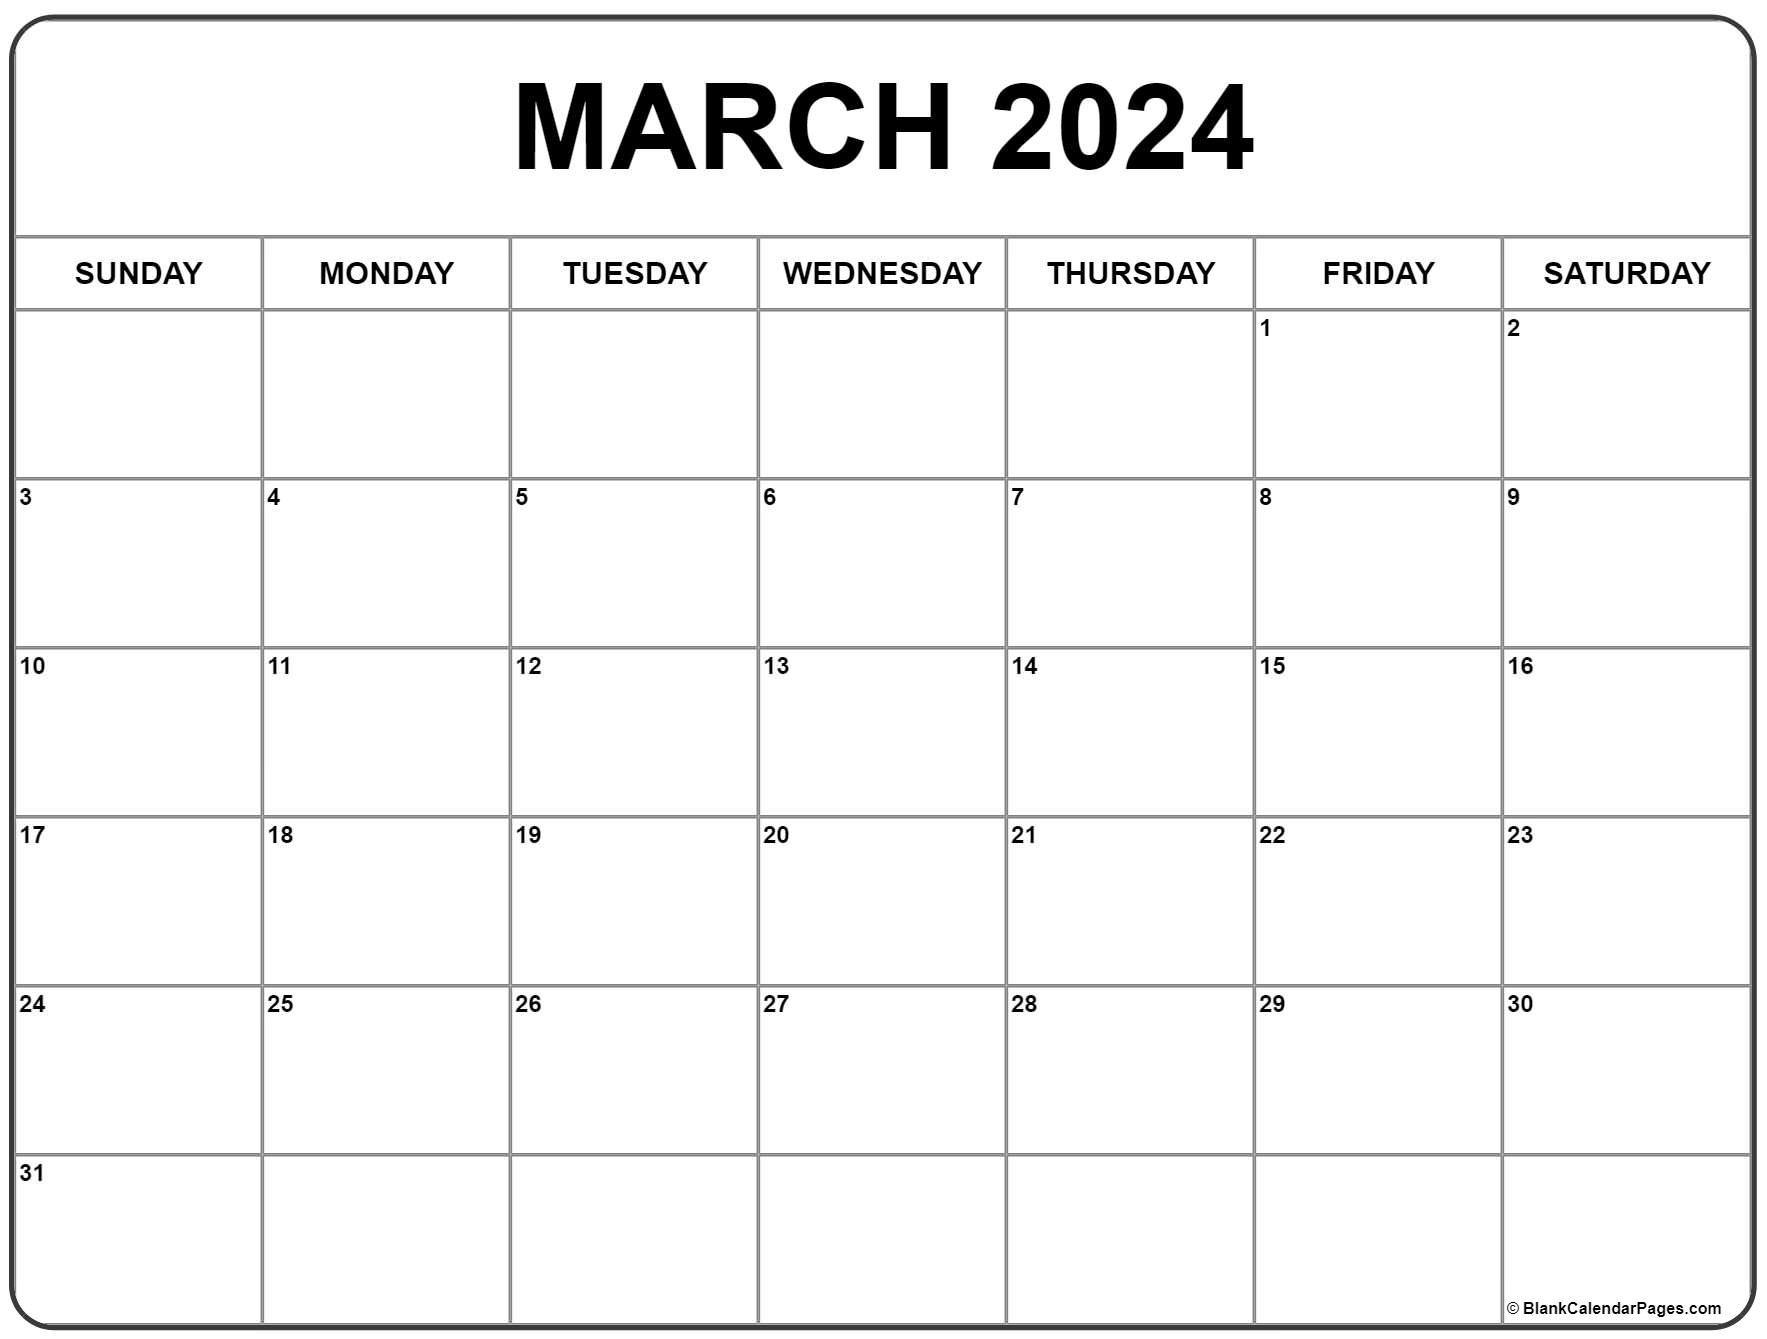 March 2024 Calendar | Free Printable Calendar for March 2024 Calendar Printable